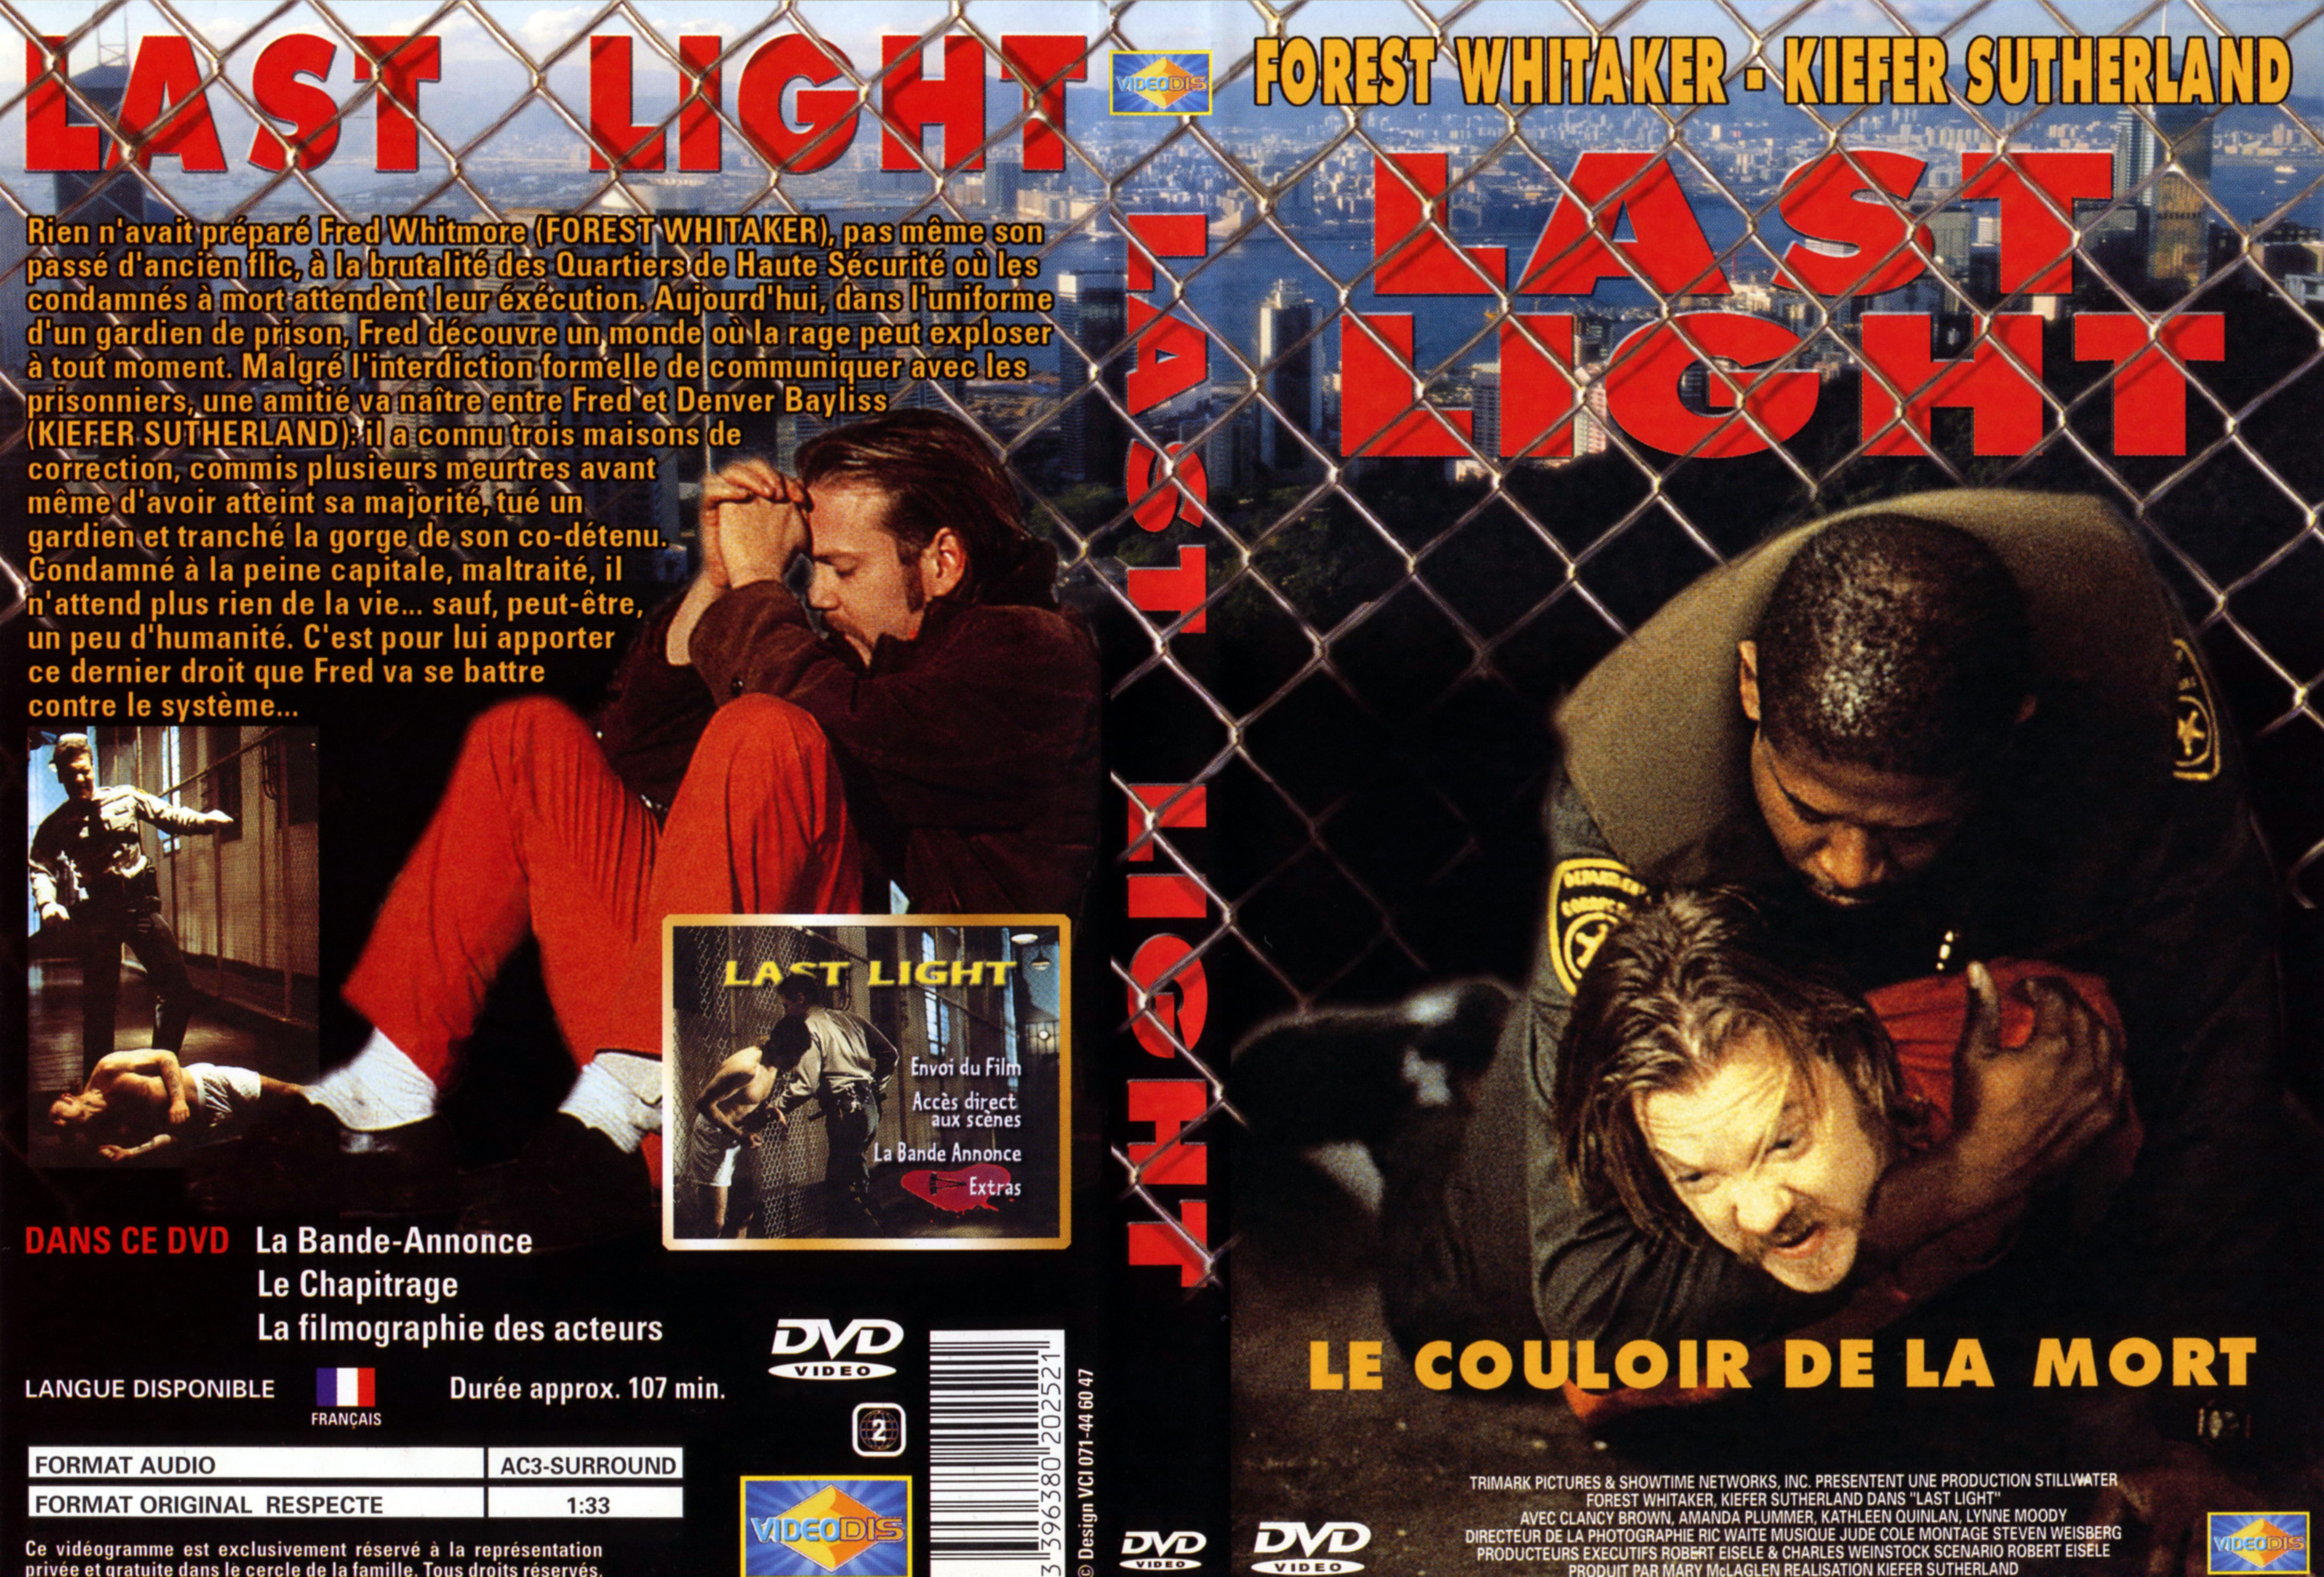 Jaquette DVD Last light v2